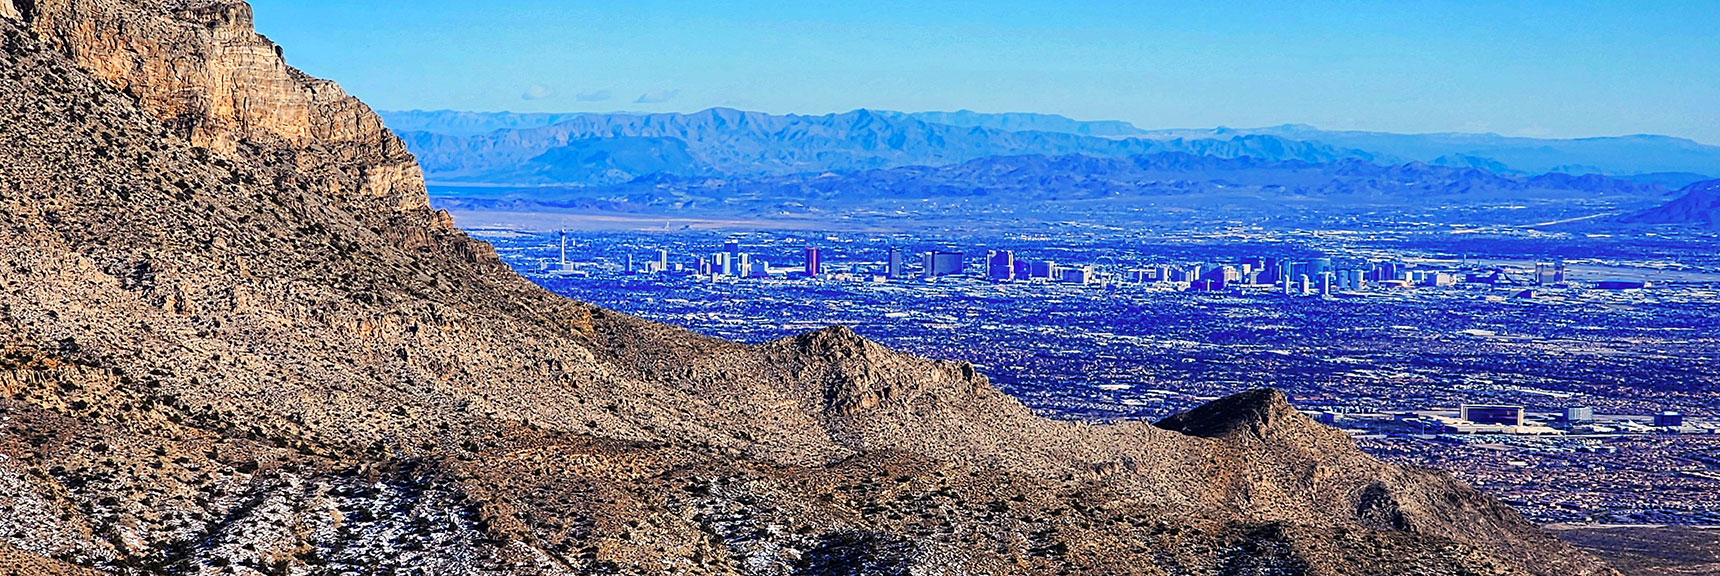 Las Vegas Strip Seen in Distant View Down Brownstone Basin. | 3 Basin Circuit | Calico Basin, Brownstone Basin, Red Rock Canyon, Nevada